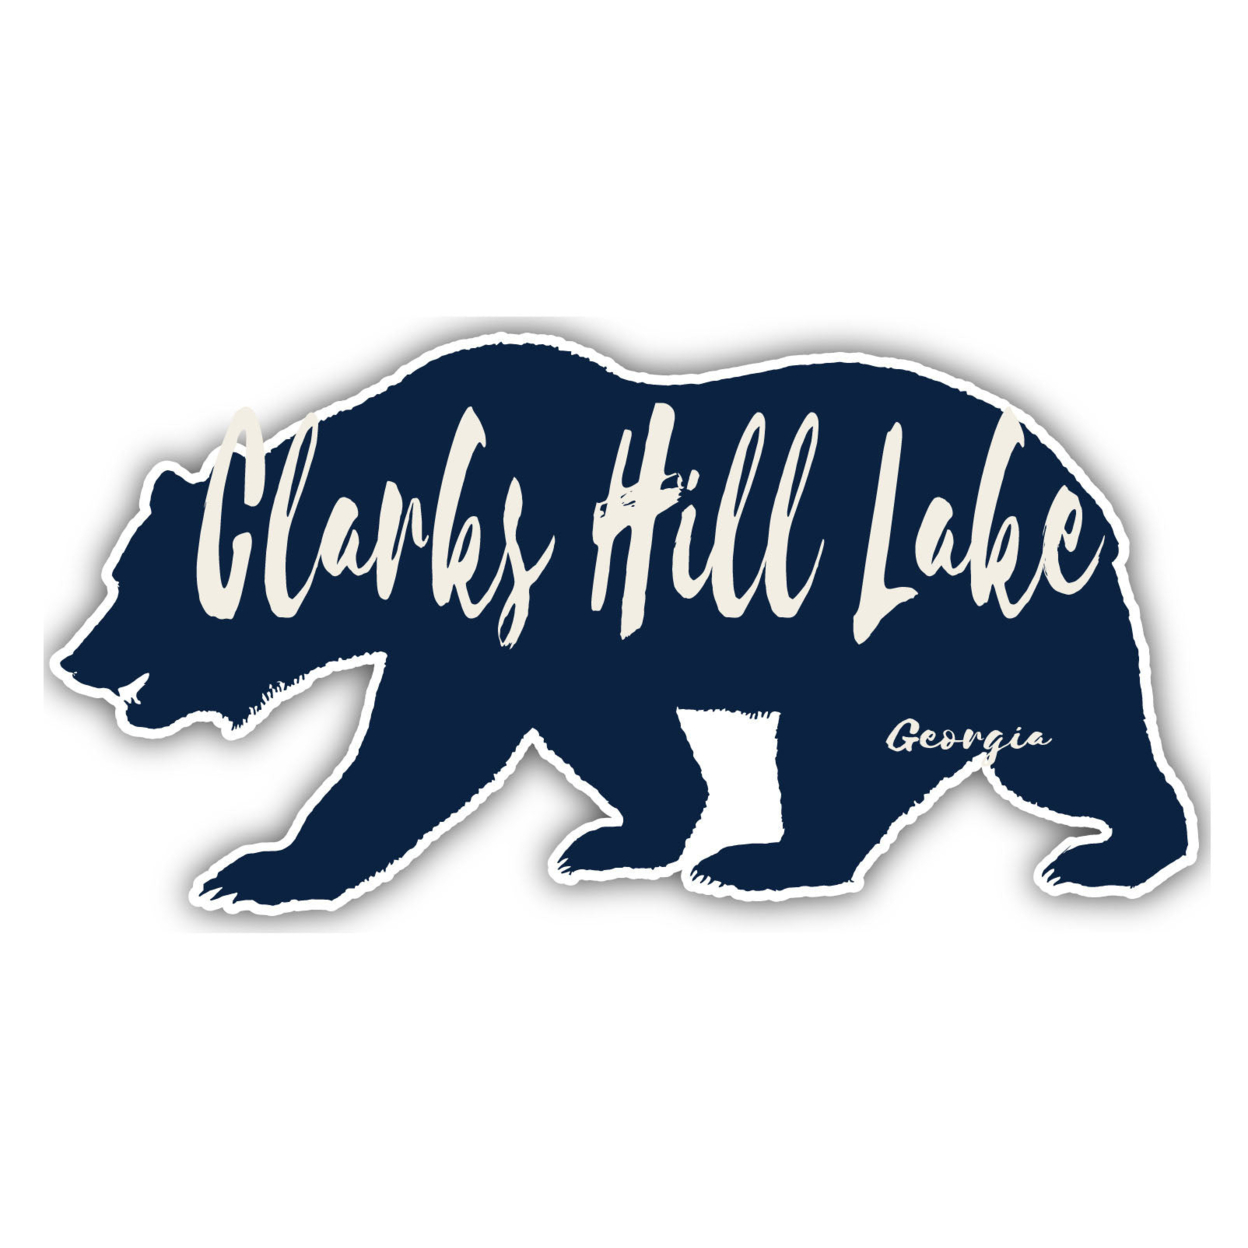 Clarks Hill Lake Georgia Souvenir Decorative Stickers (Choose Theme And Size) - Single Unit, 2-Inch, Bear